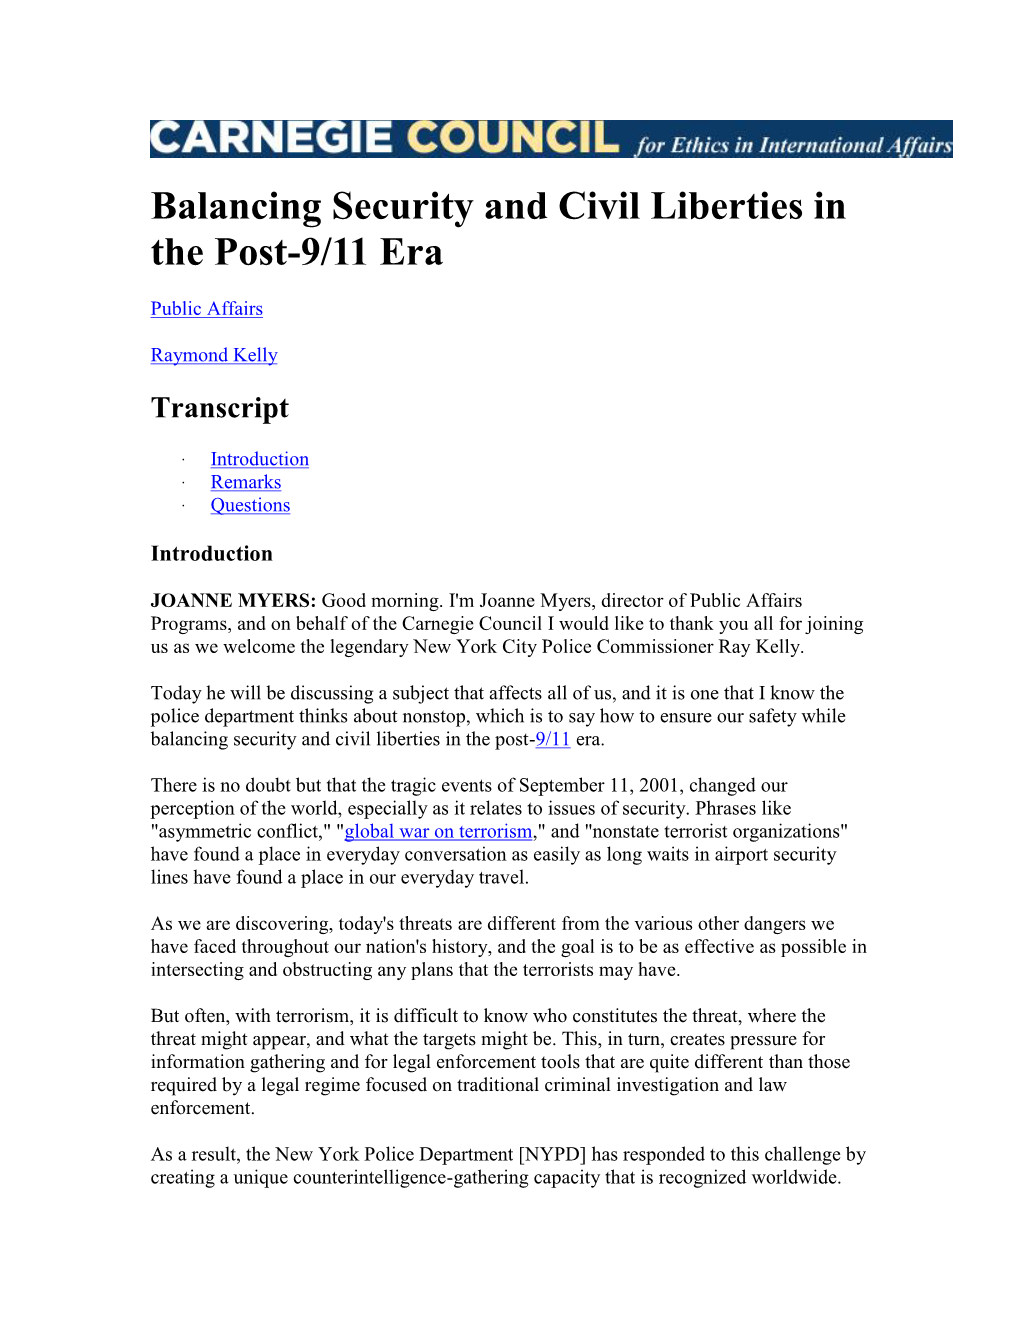 Balancing Security and Civil Liberties in the Post-9/11 Era